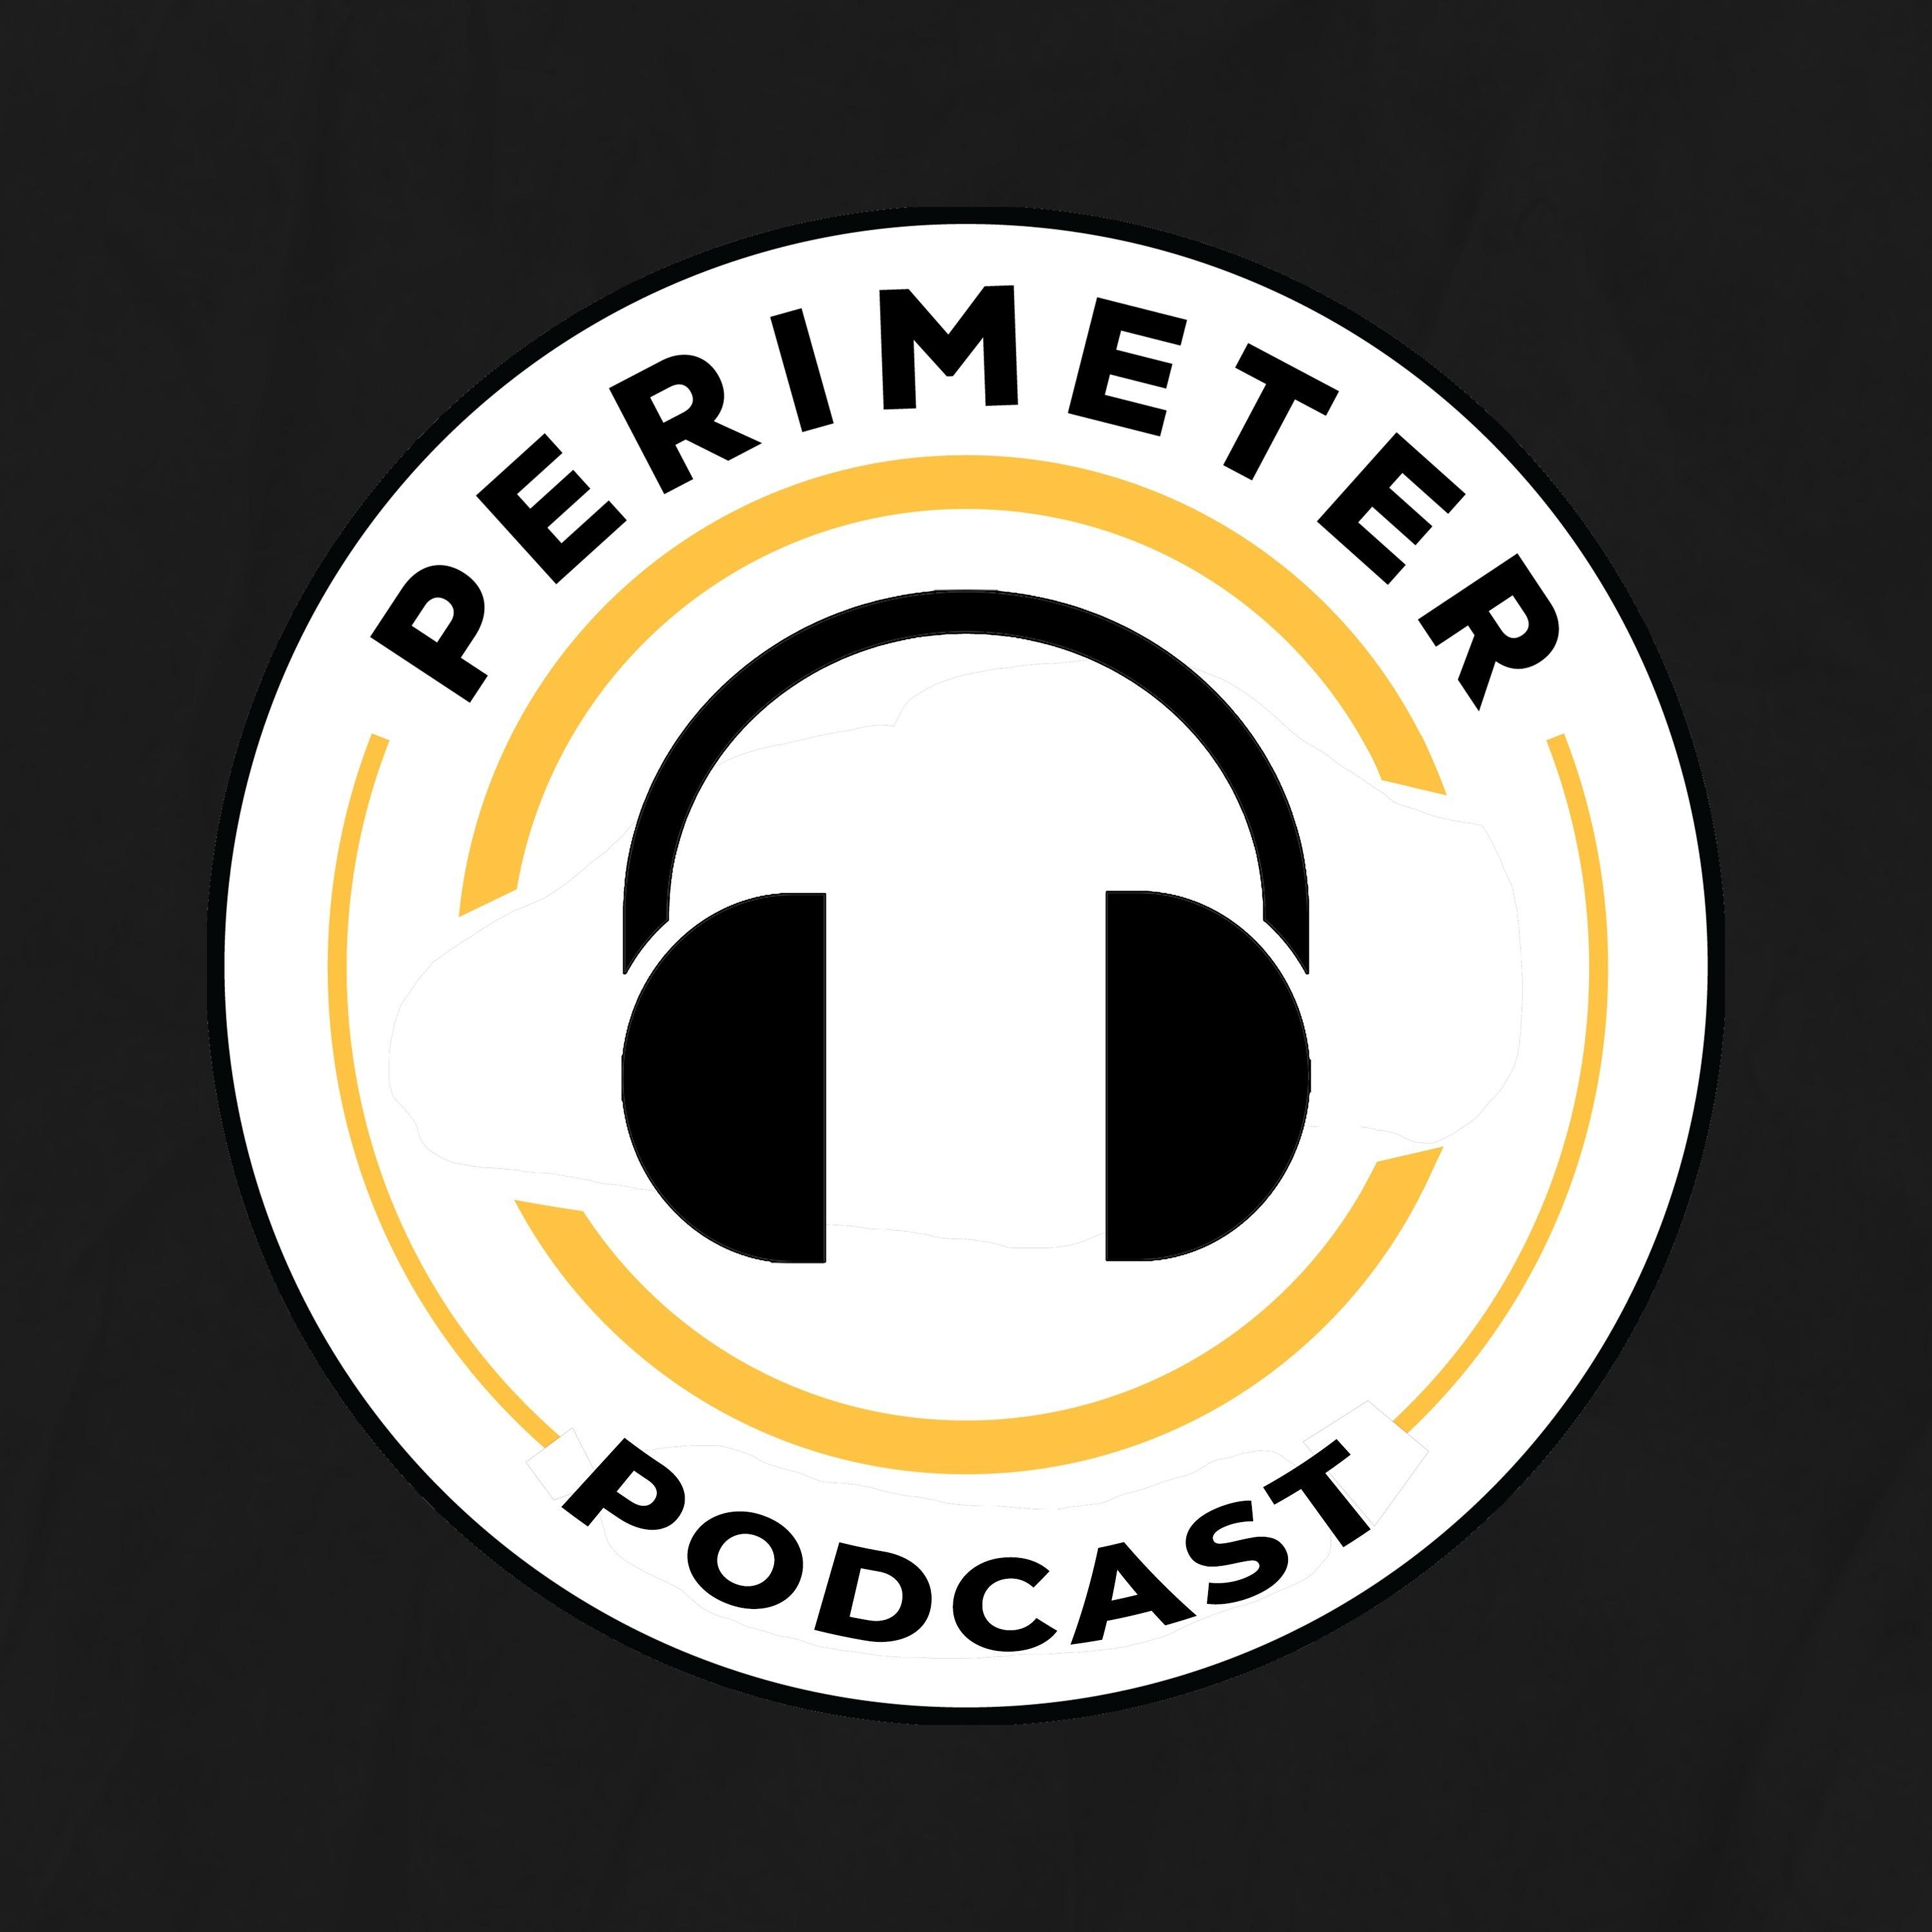 Perimeter Podcast